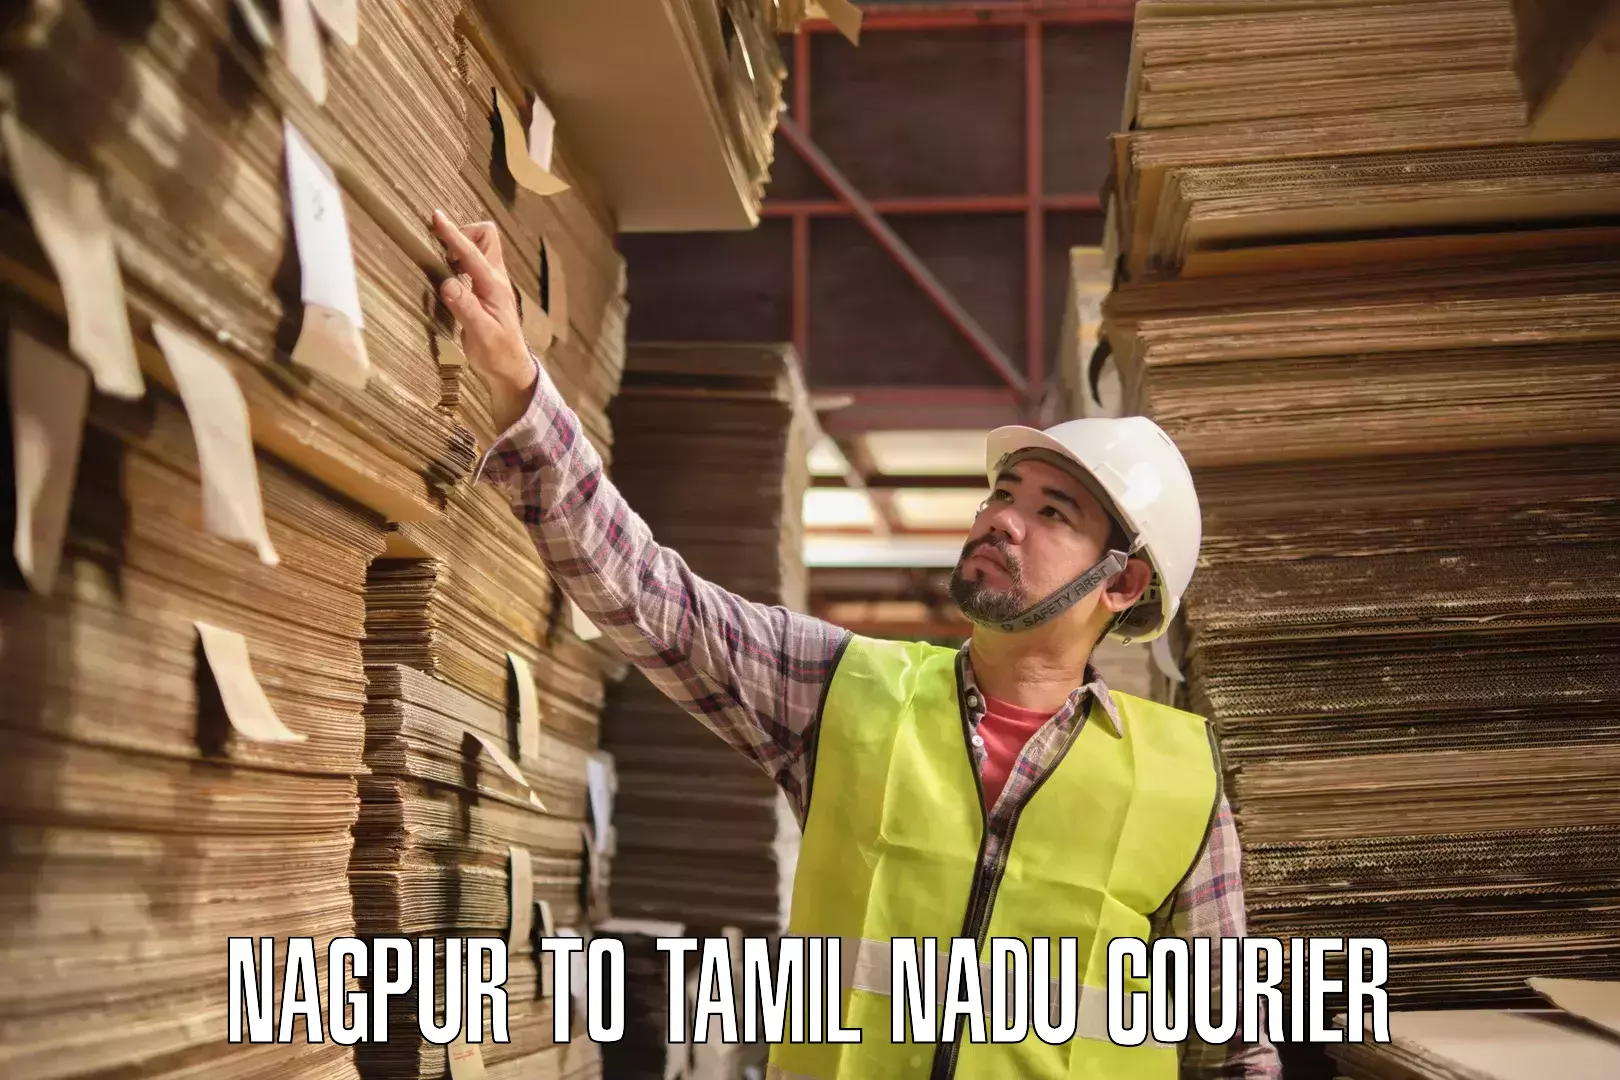 Enhanced tracking features Nagpur to Tamil Nadu